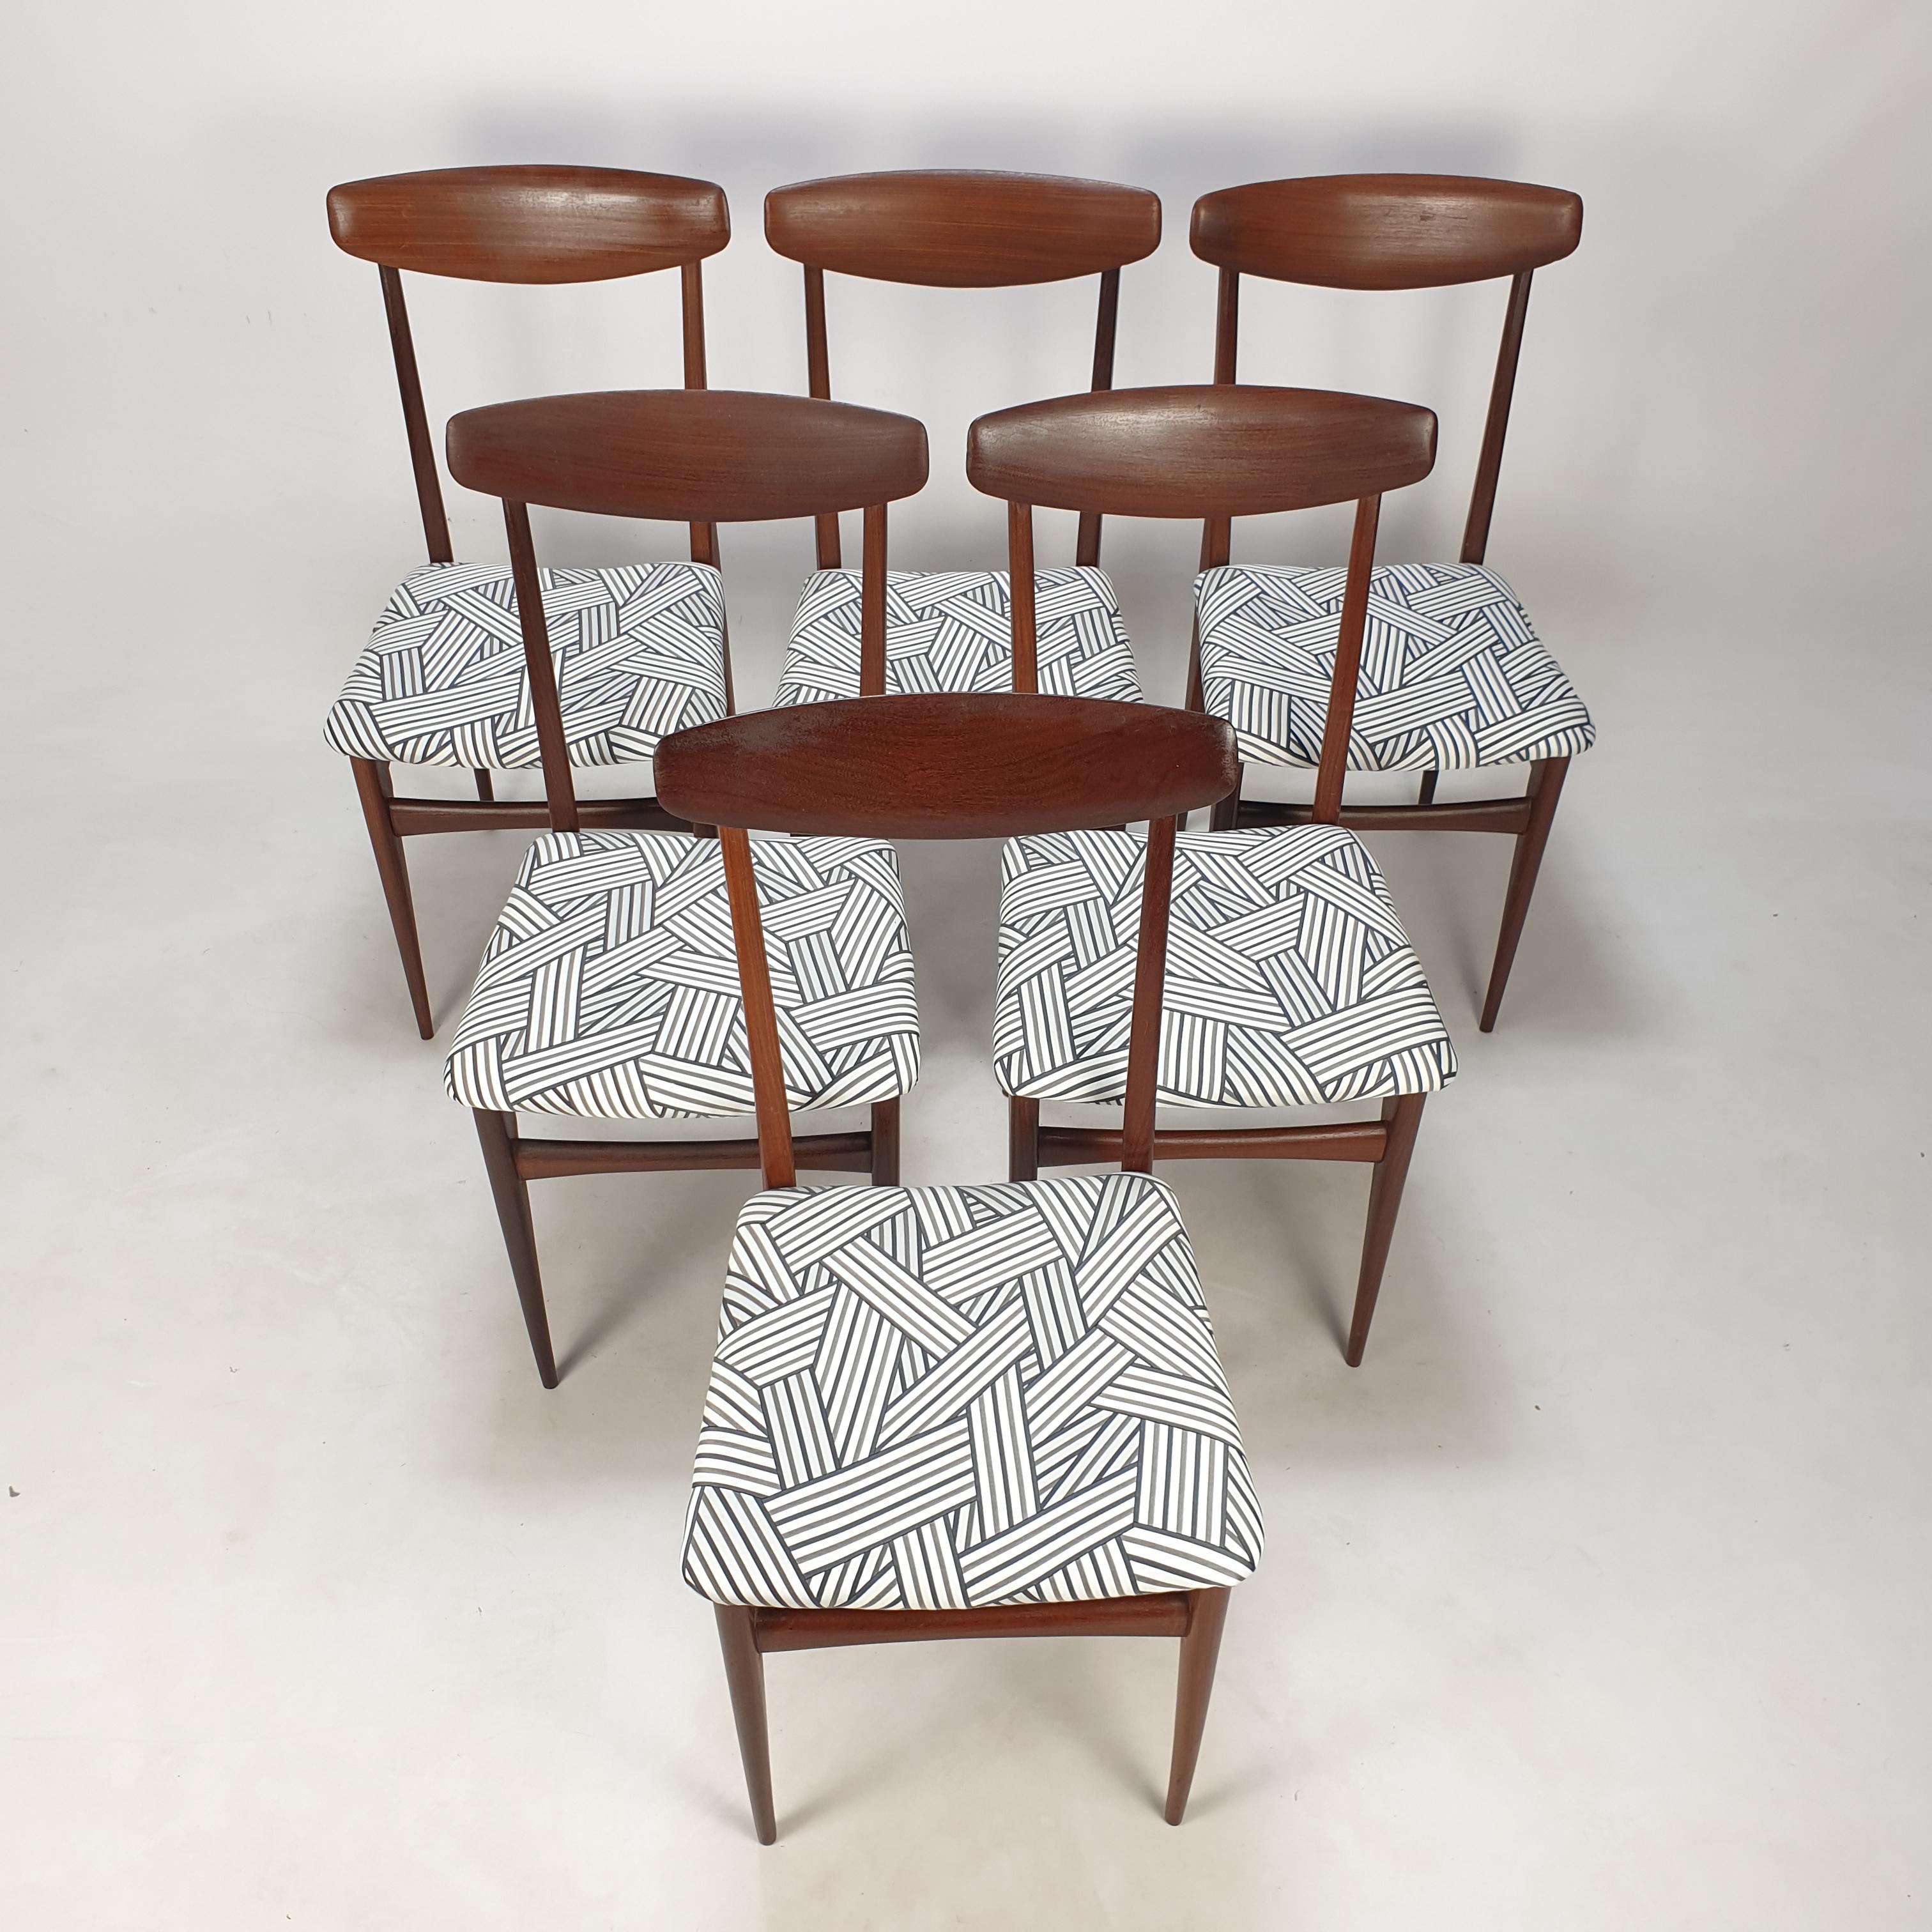 Mid-20th Century Set of 6 Mid Century Italian Teak Dining Chairs, 1950s For Sale